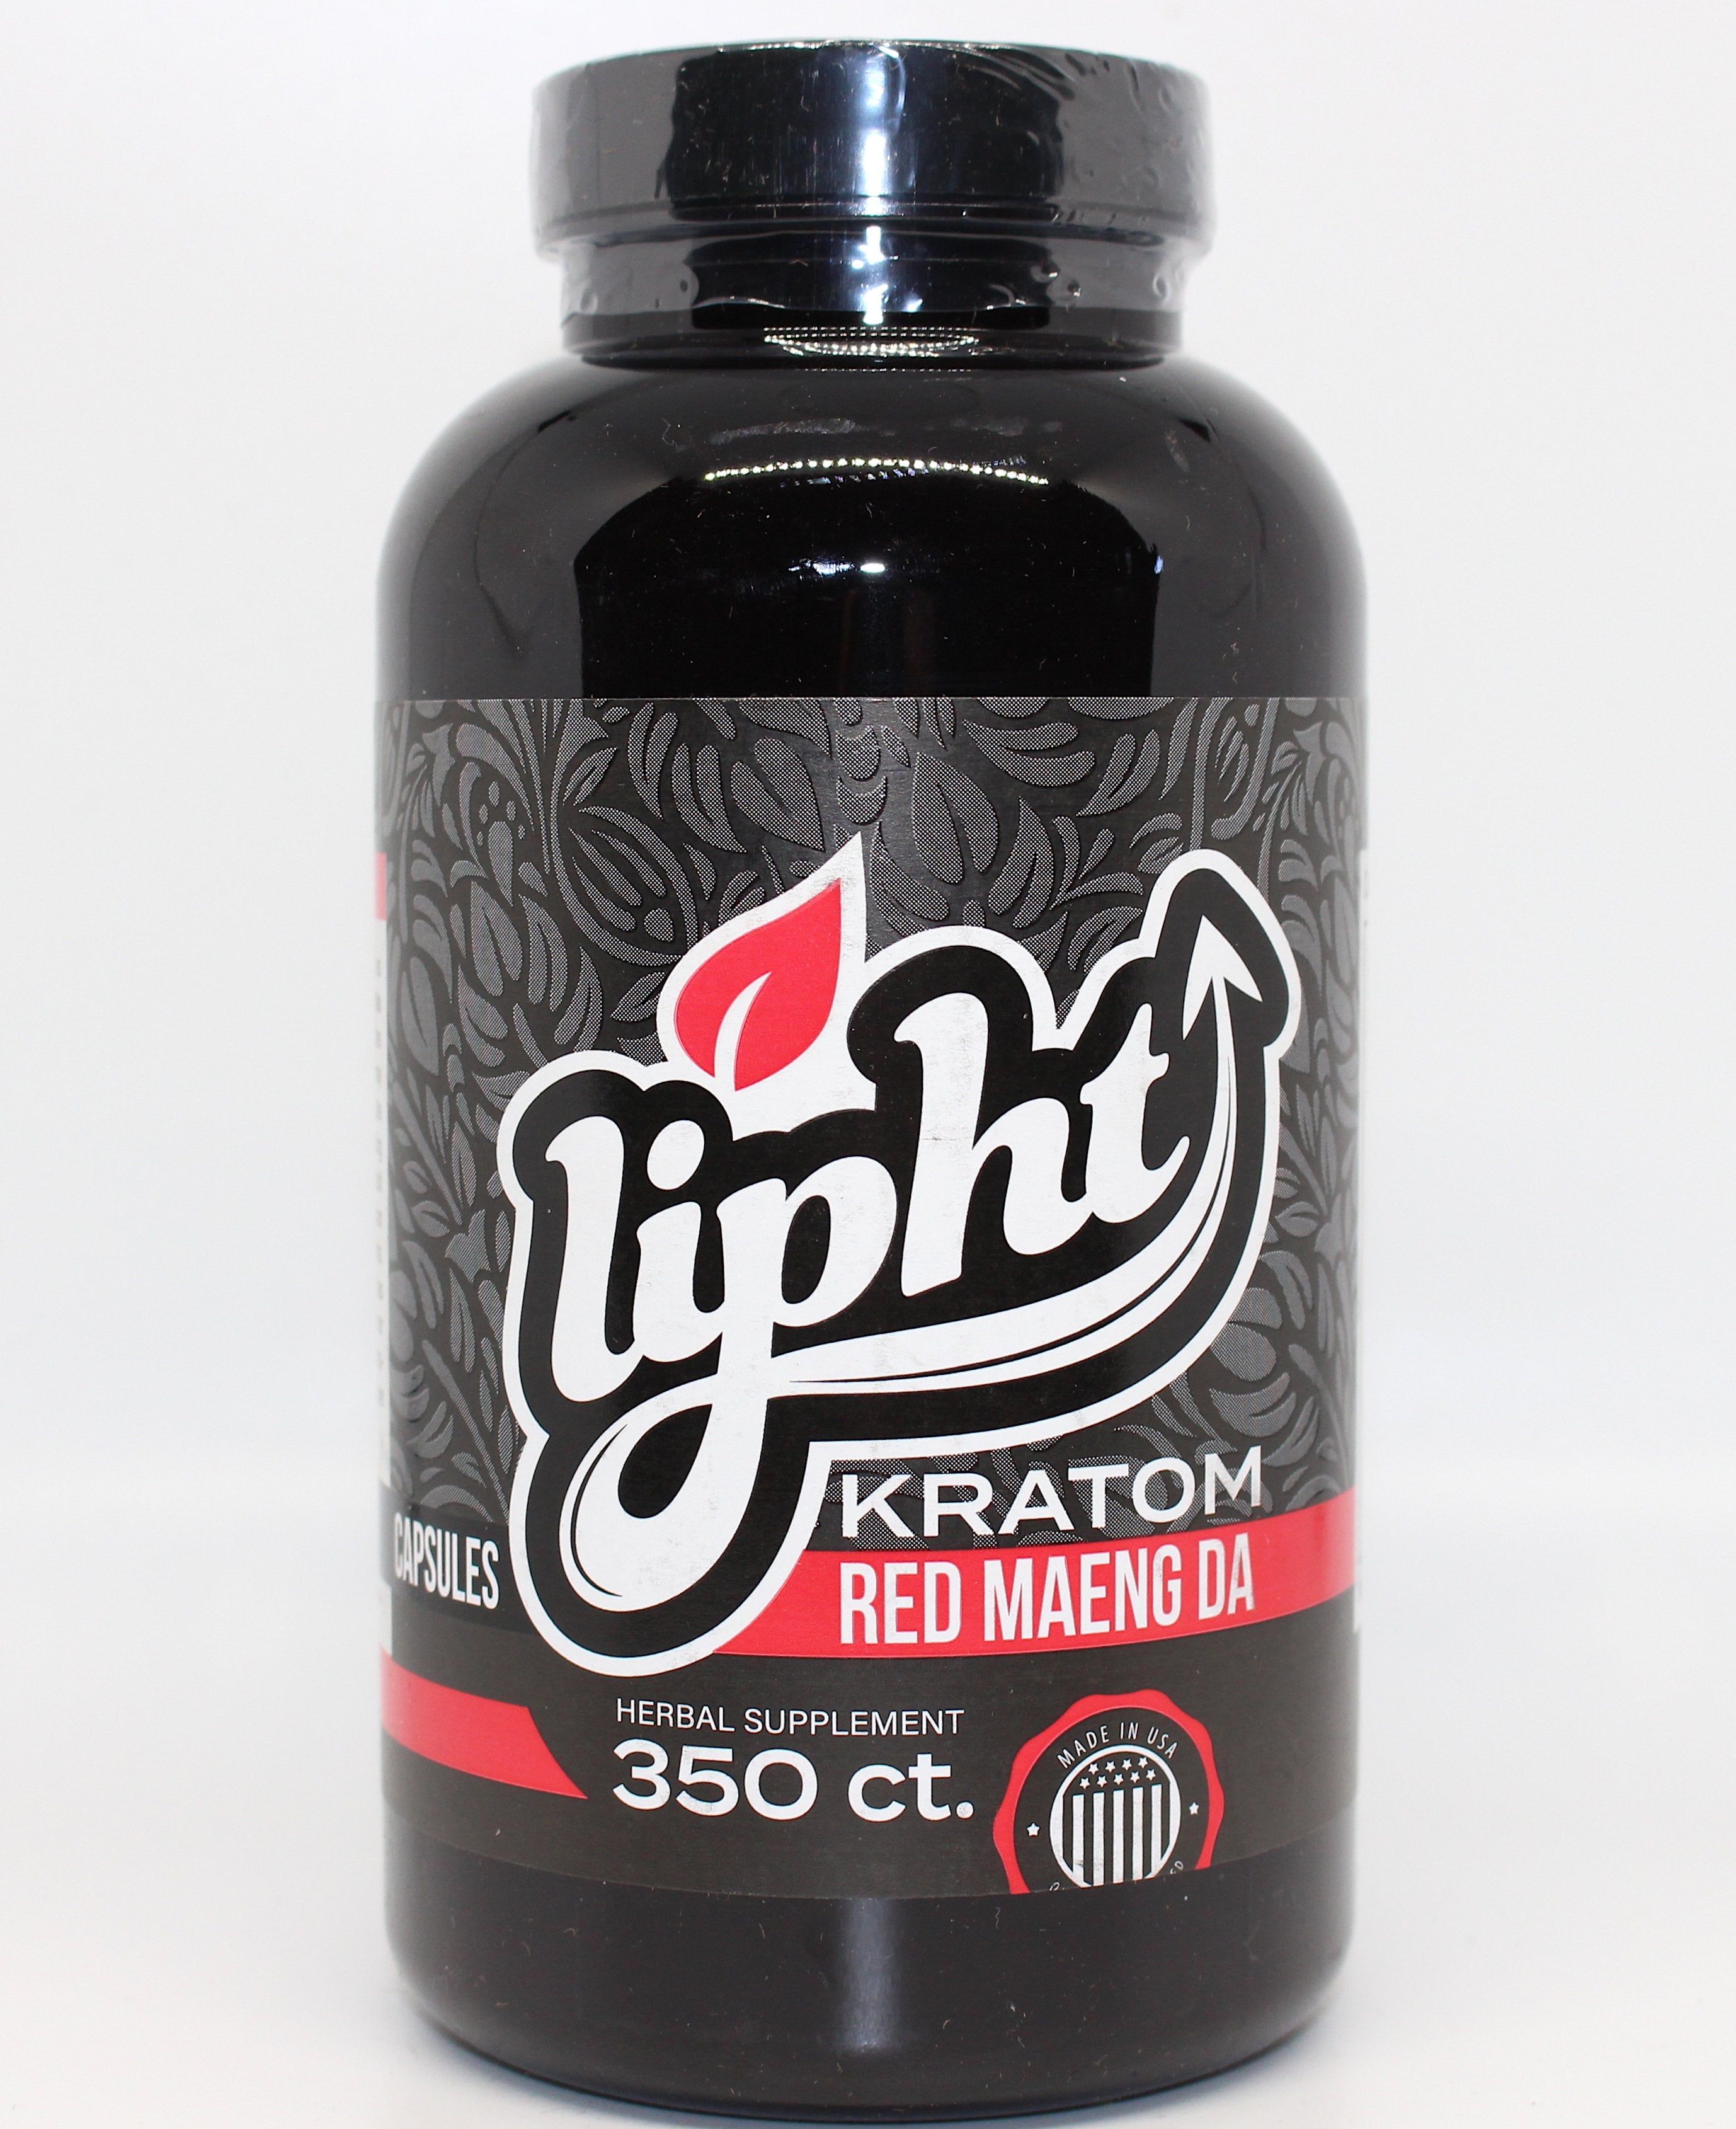 Lipht Kratom Premium  350ct (SELECT PIC FOR MORE OPTIONS)